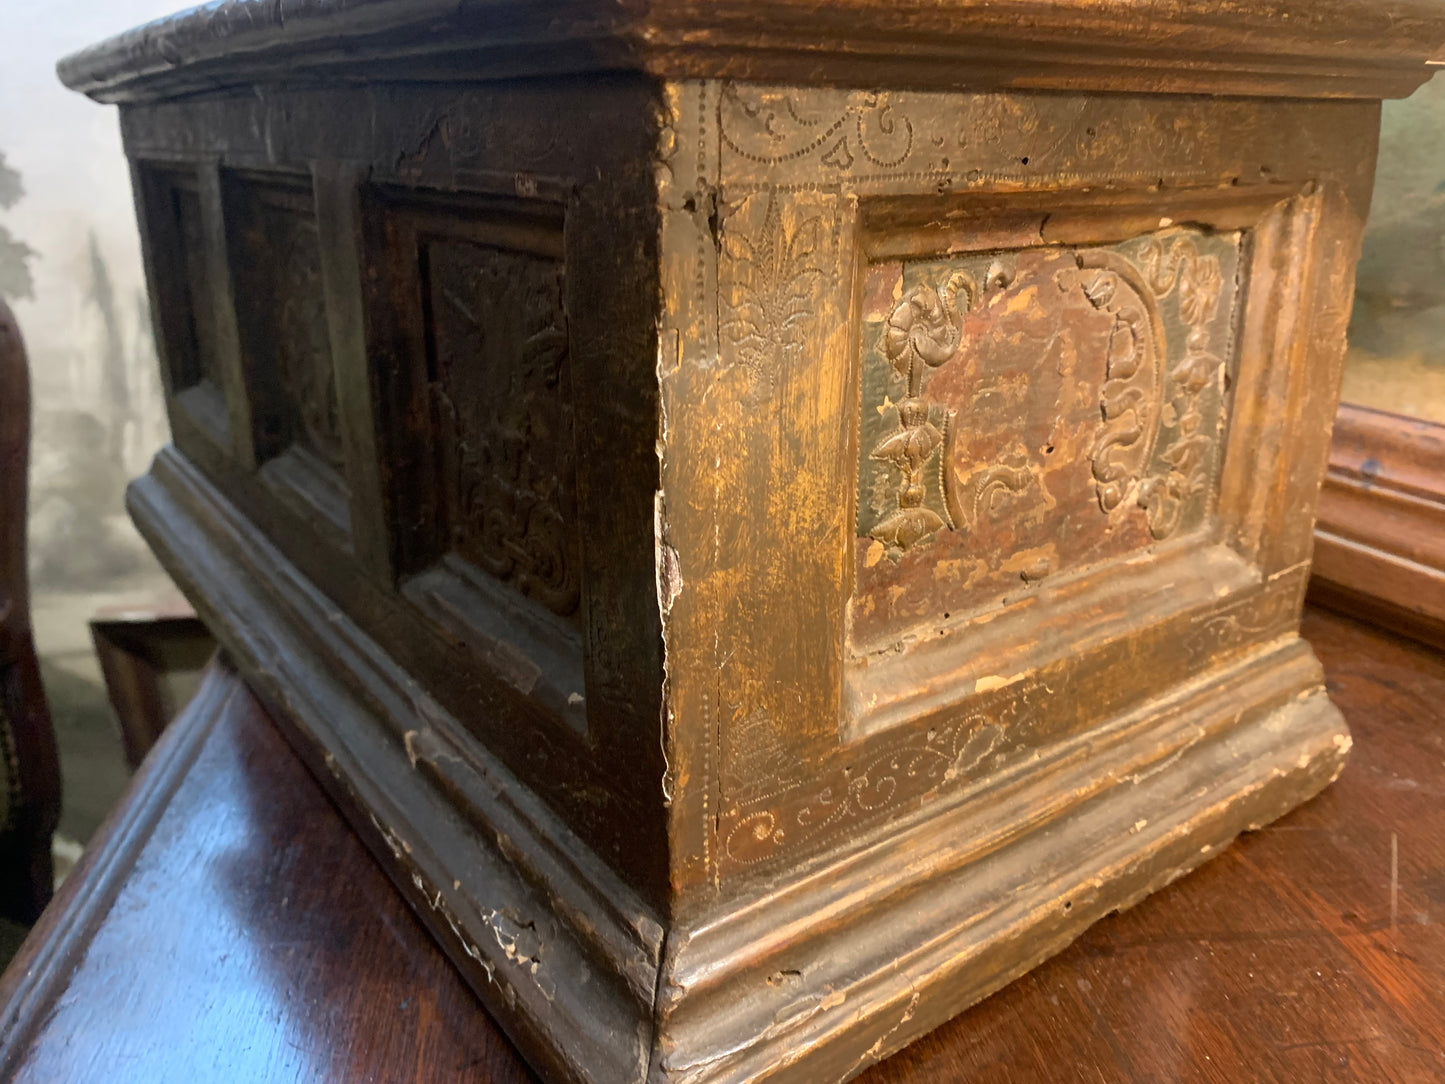 Renaissance-style casket with later period workmanship.